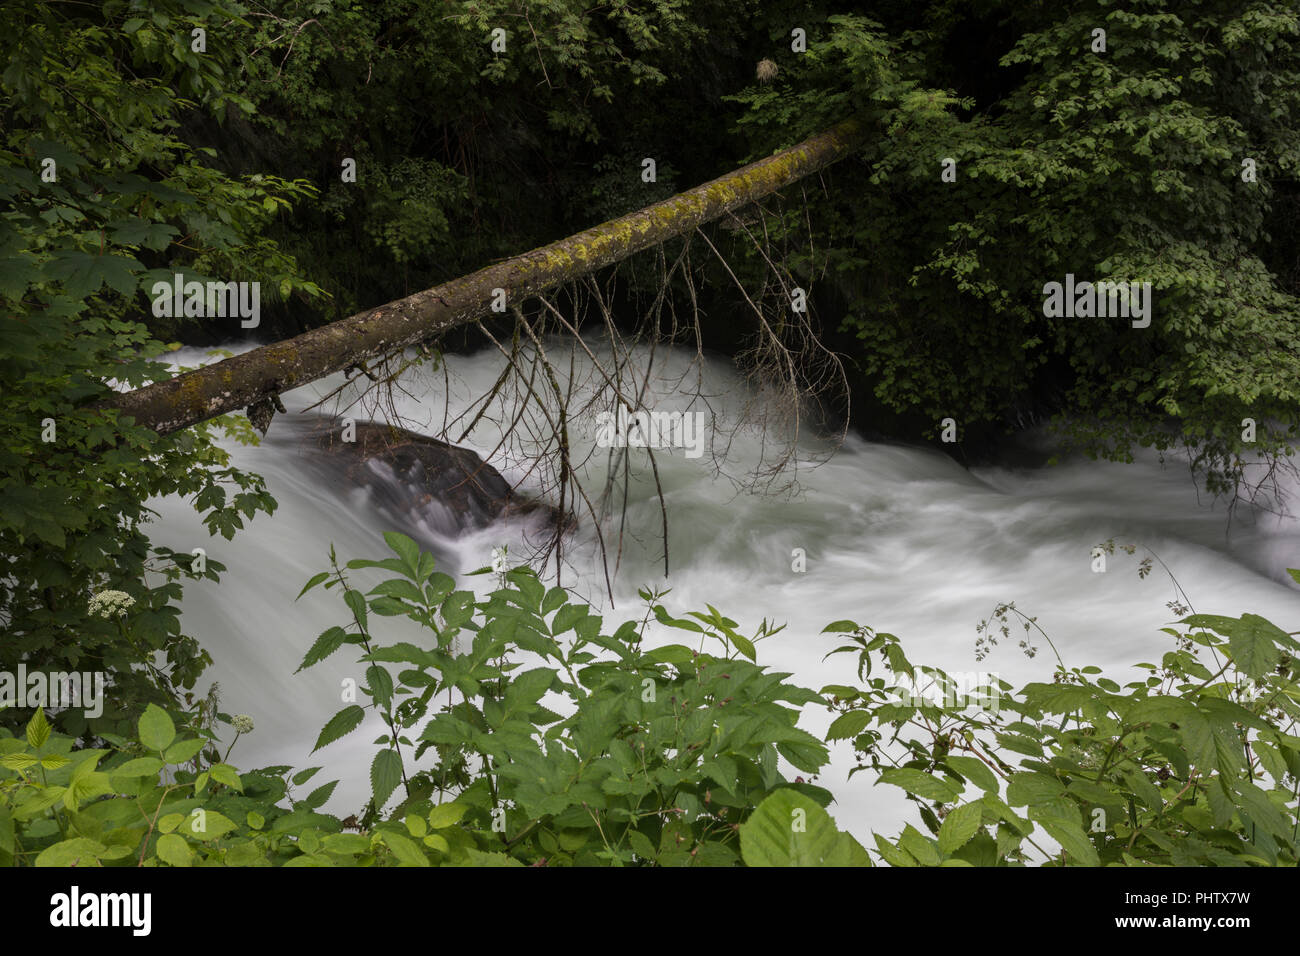 Tree log over a river, Gorge in Austria, Talbachklamm, Schladming, Untertal, Austria Stock Photo